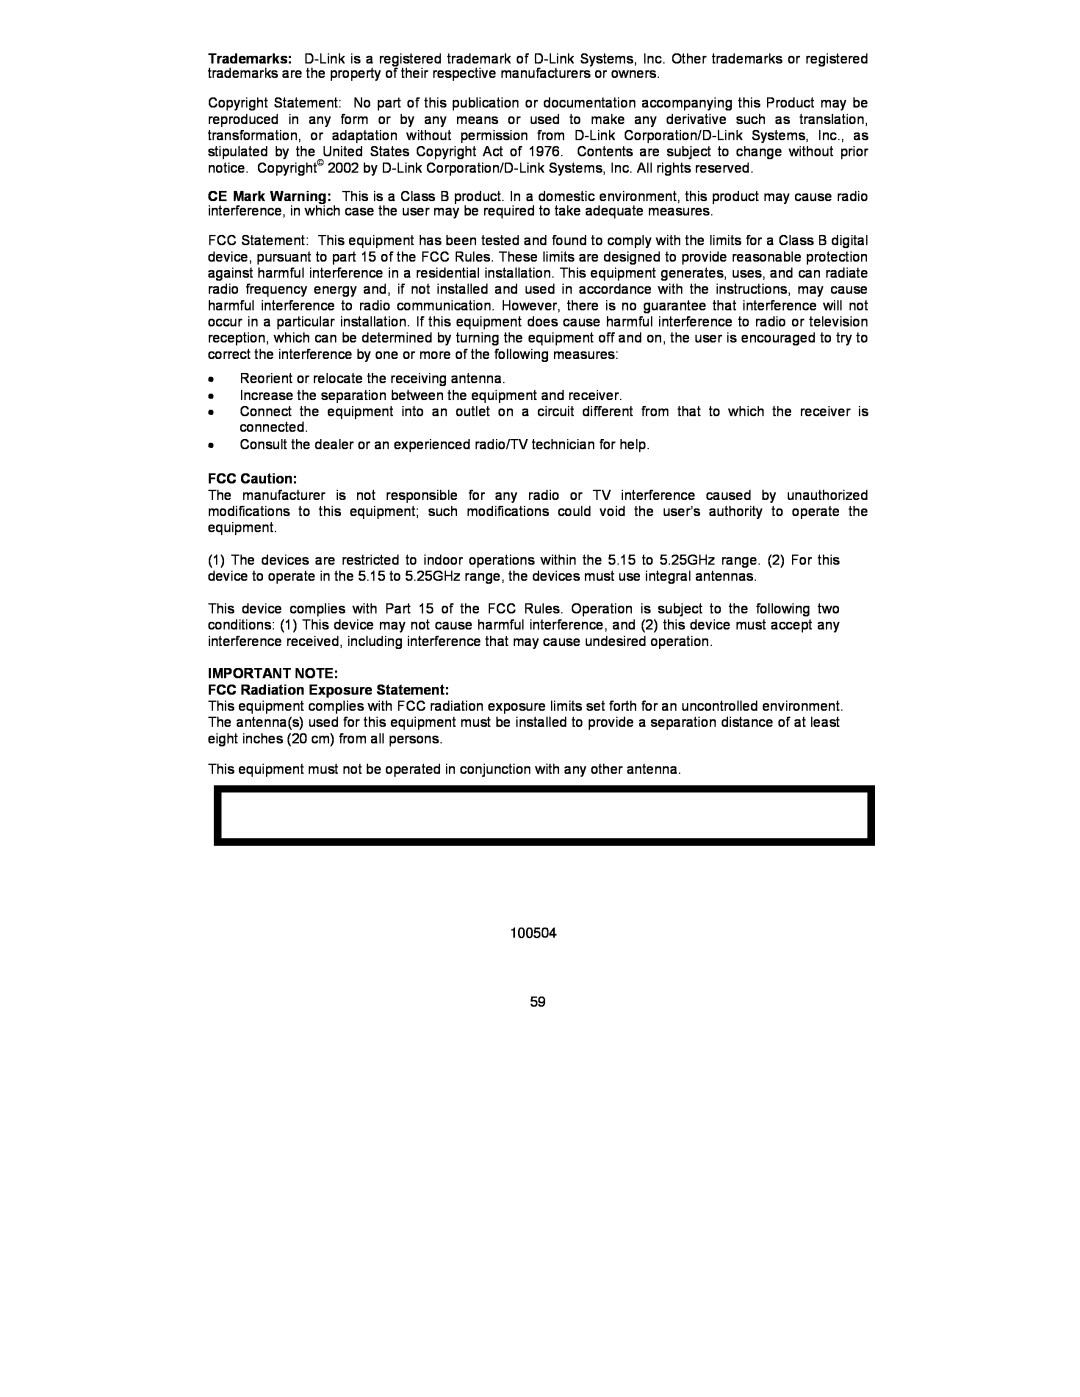 D-Link DWL-650 manual FCC Caution, IMPORTANT NOTE FCC Radiation Exposure Statement 